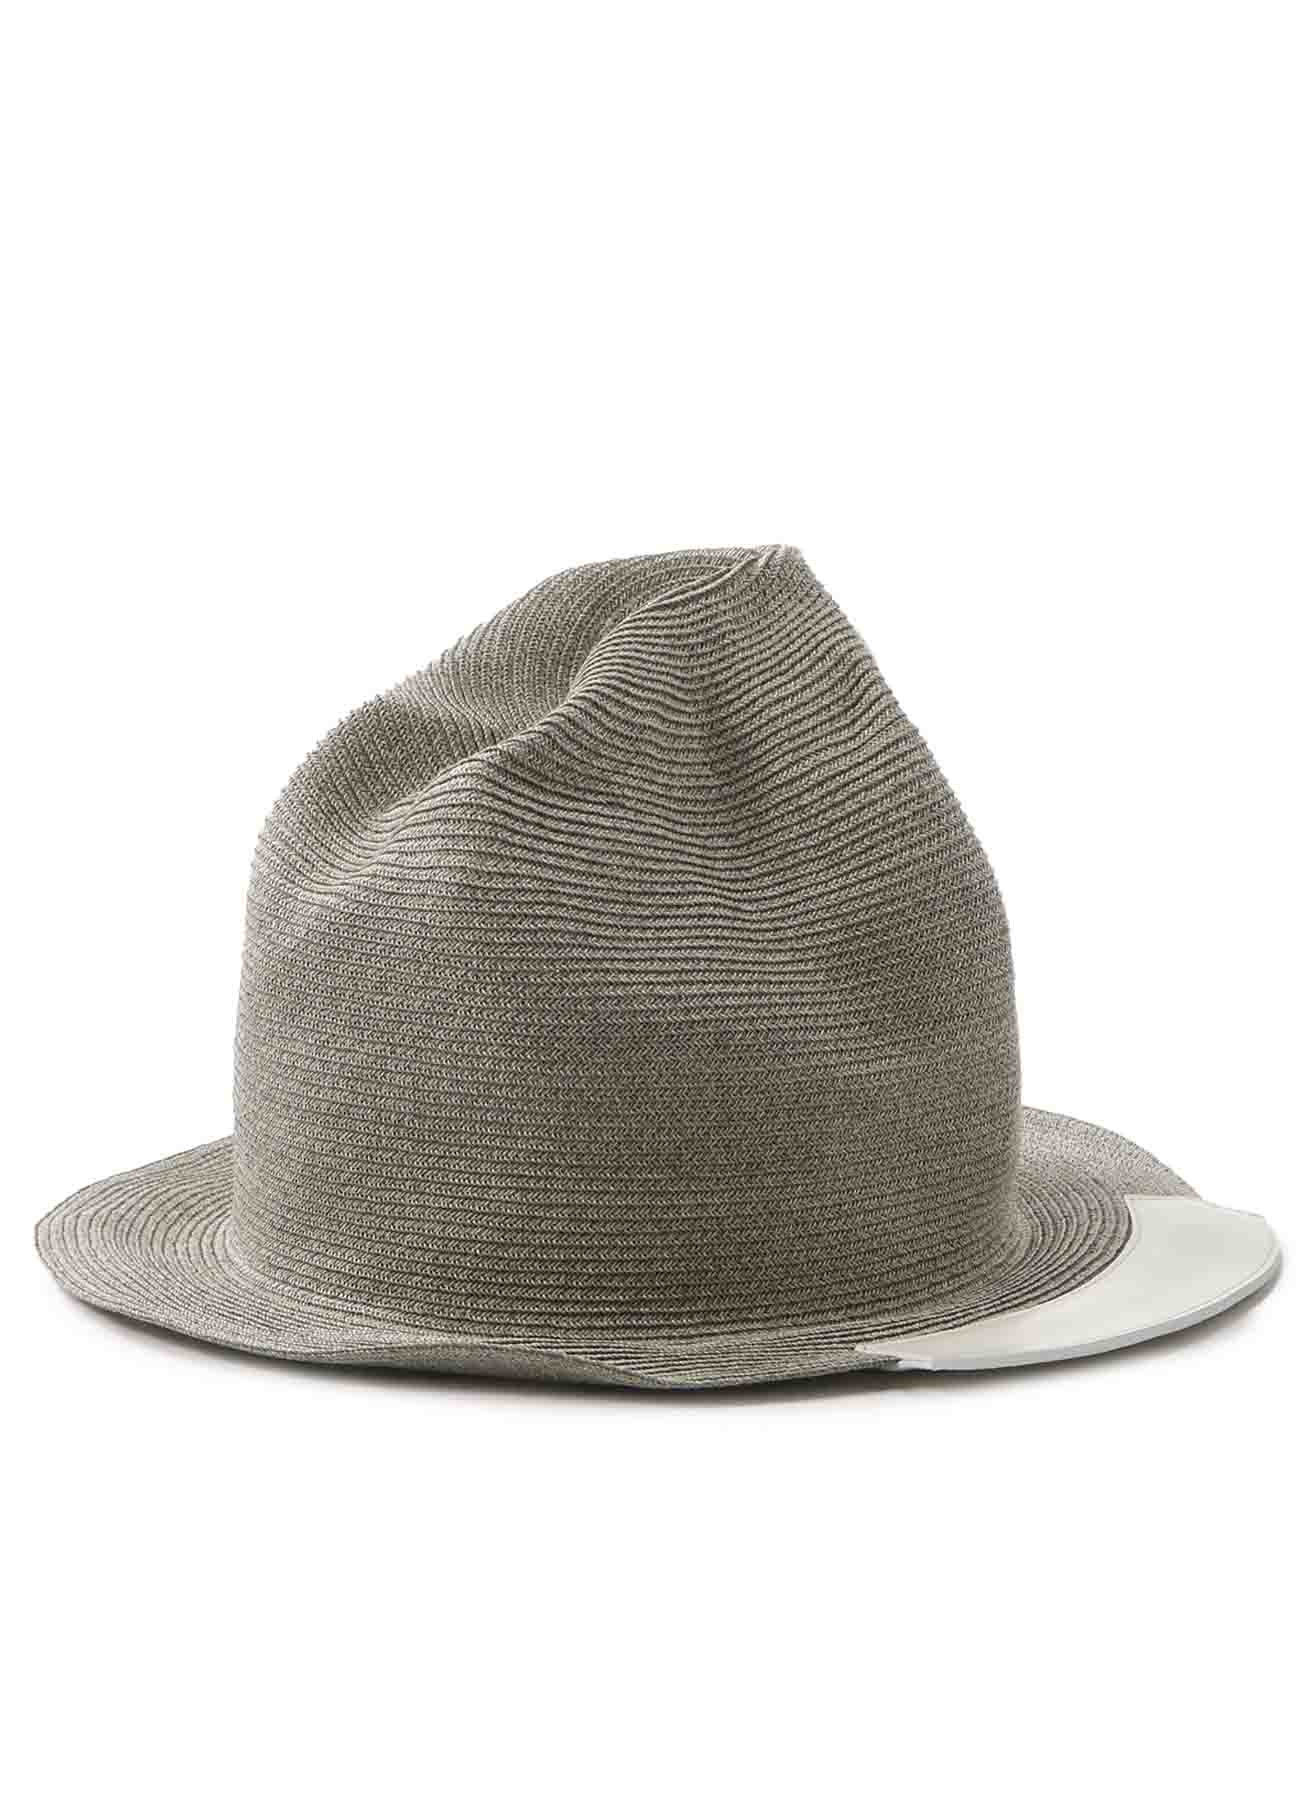 Paper Braid Mountain Hat